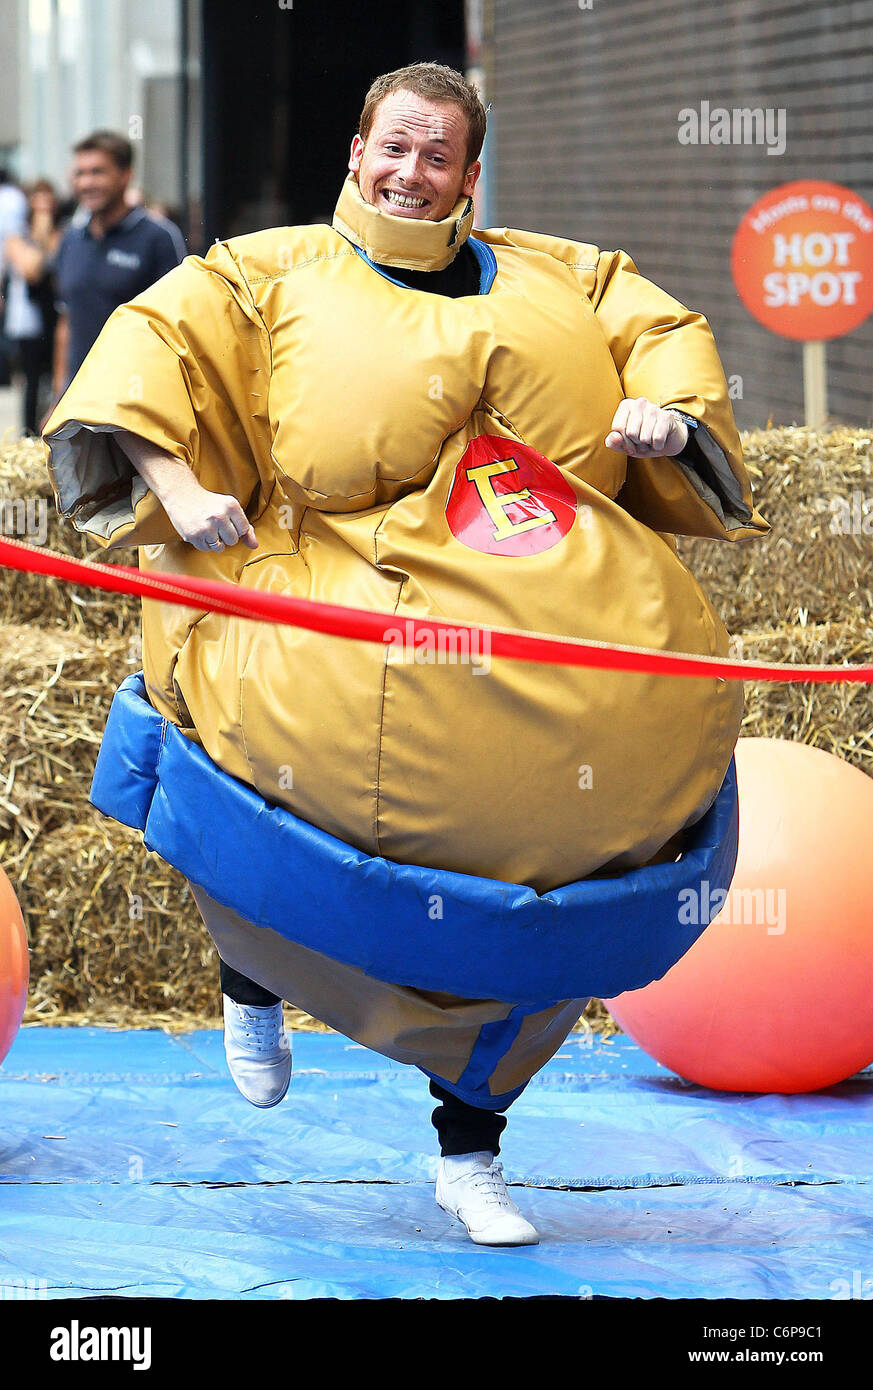 Sumo wrestlers costume -Fotos und -Bildmaterial in hoher Auflösung – Alamy